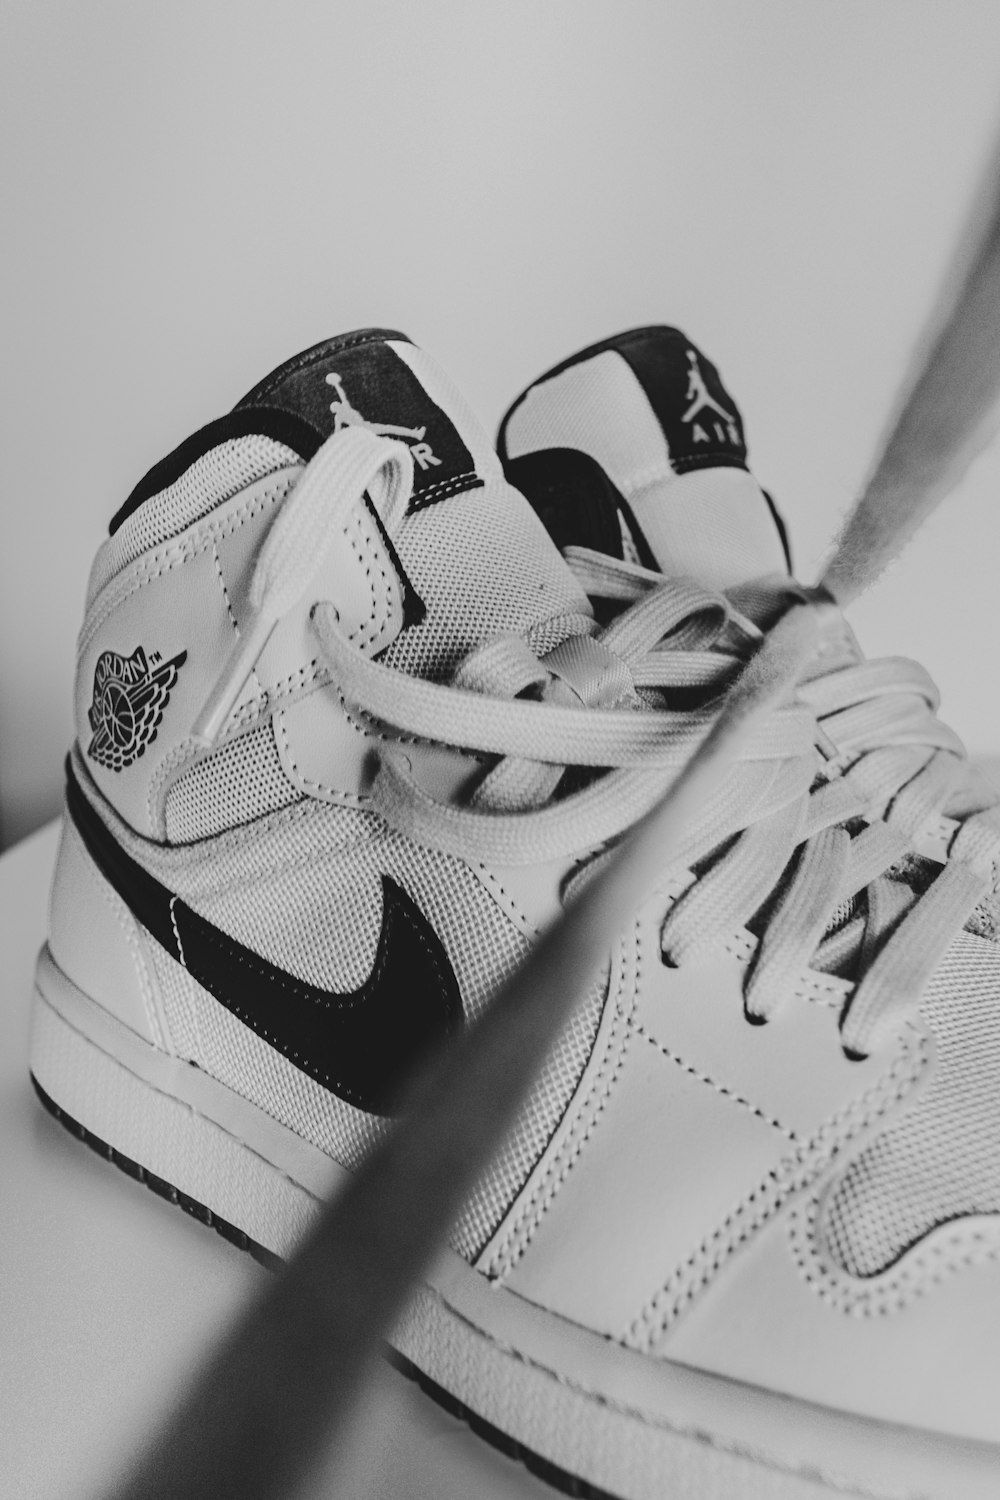 Foto Nike air jordan 1 blanco y negro – Imagen Gris gratis en Unsplash